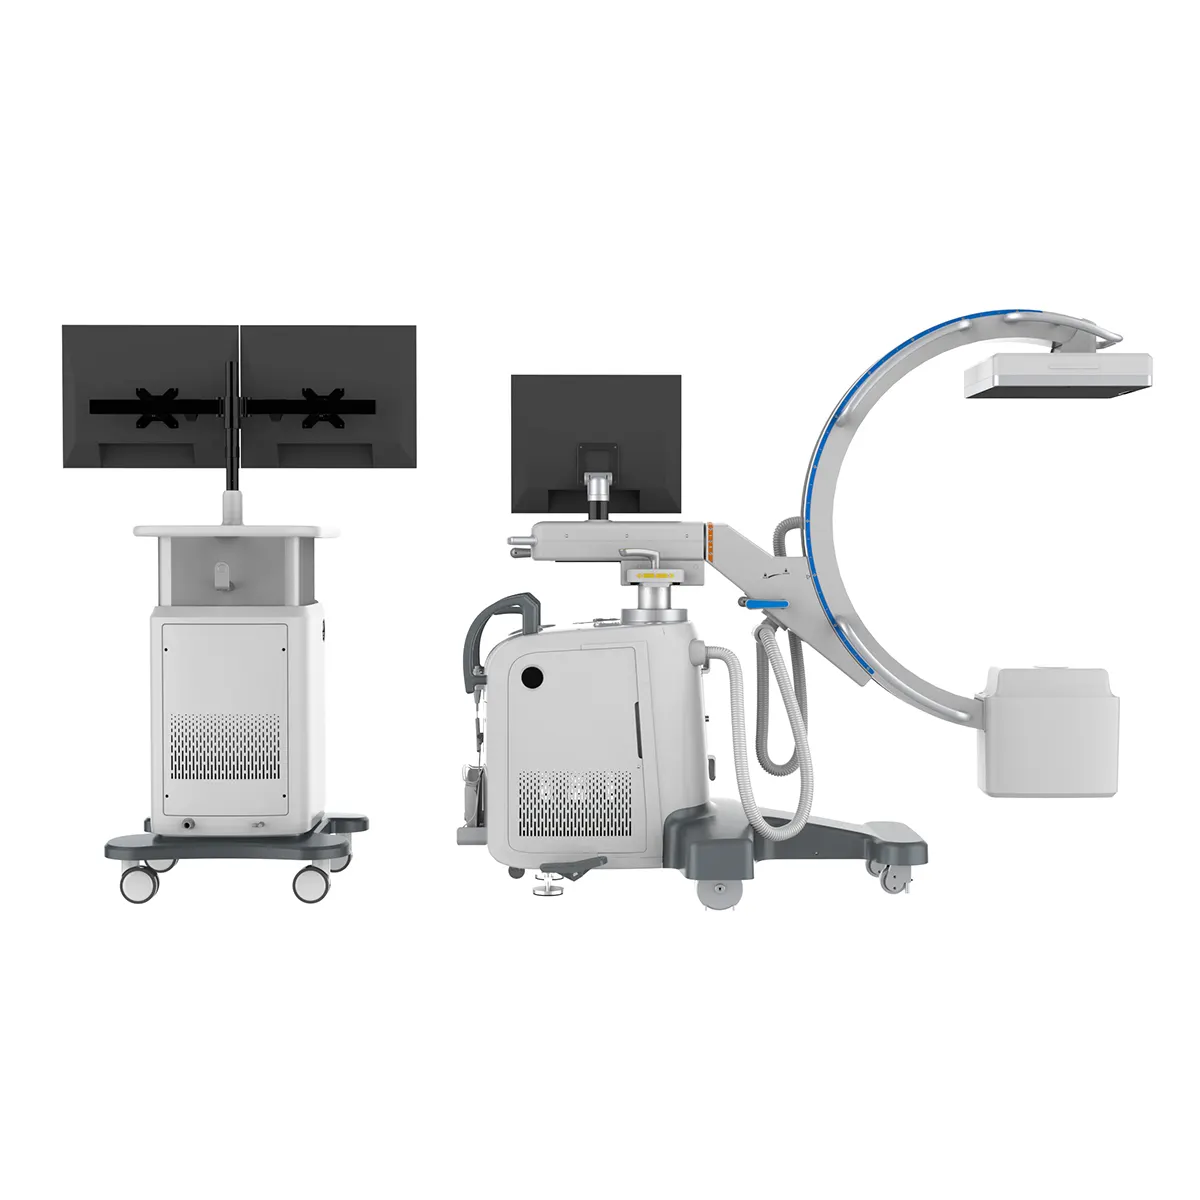 5KW มือถือ C Am X Ray เครื่องที่มีเครื่องตรวจจับแบน,เครื่อง X-Ray แพทย์อุปกรณ์ X-Ray และอุปกรณ์เสริม